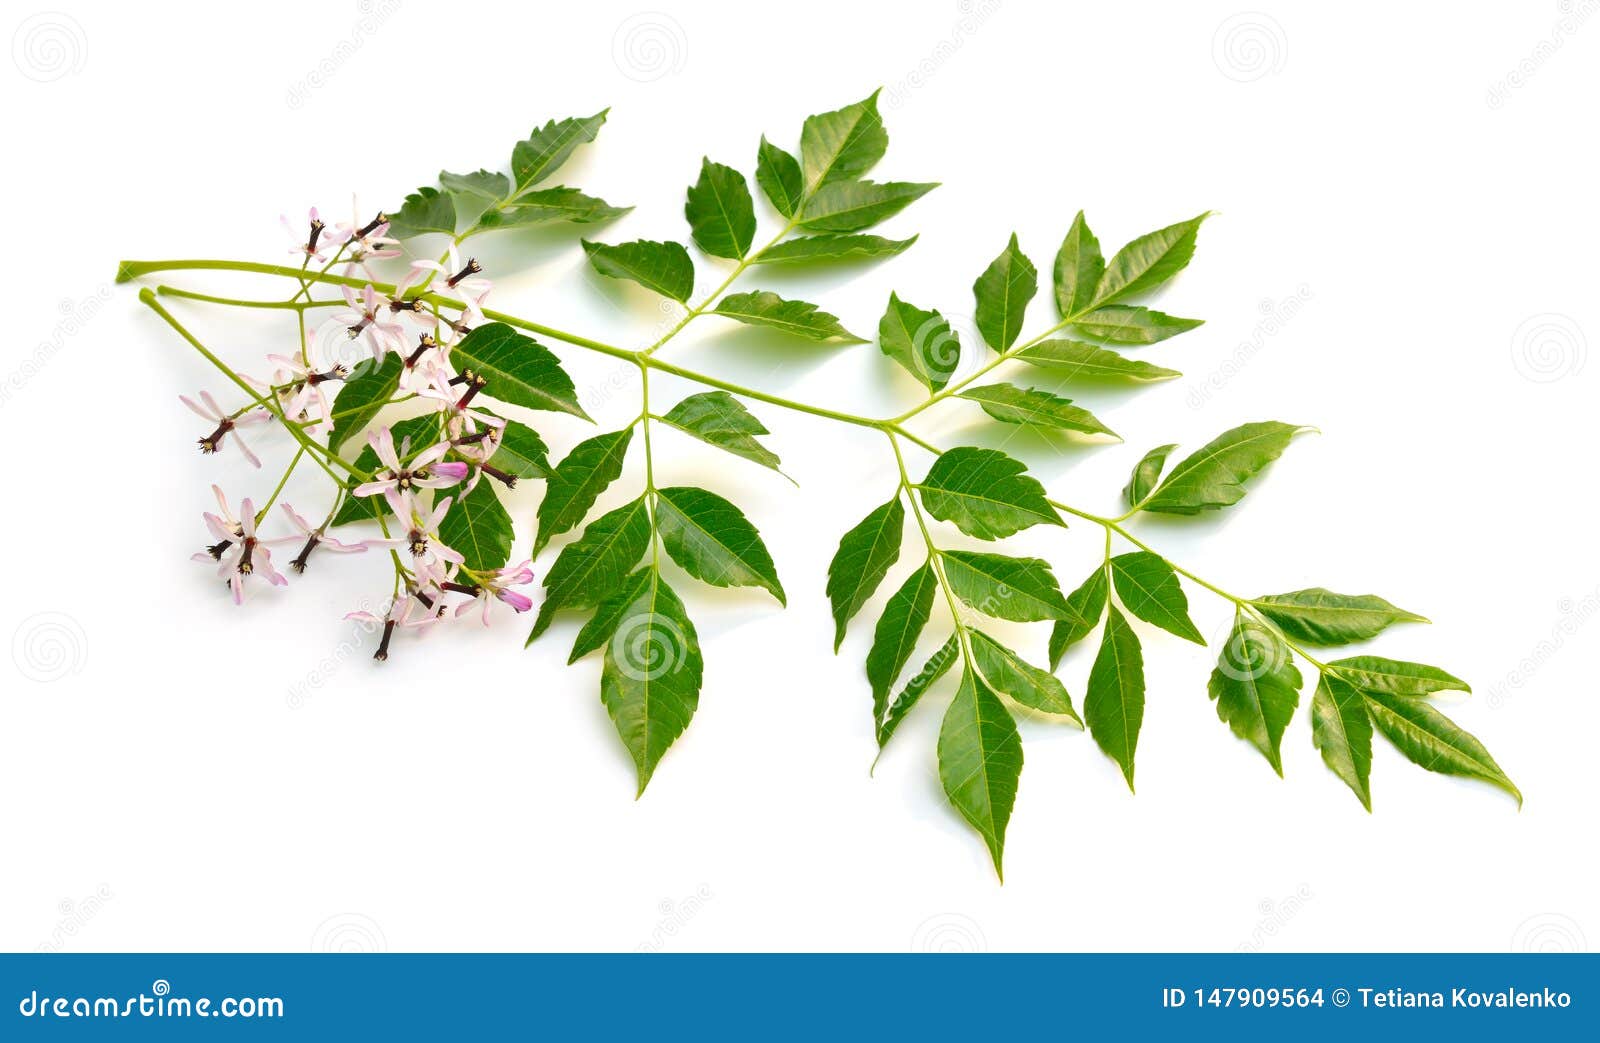 melia azedarach, chinaberry tree, pride of india, bead-tree, cape lilac, syringa berrytree, persian lilac